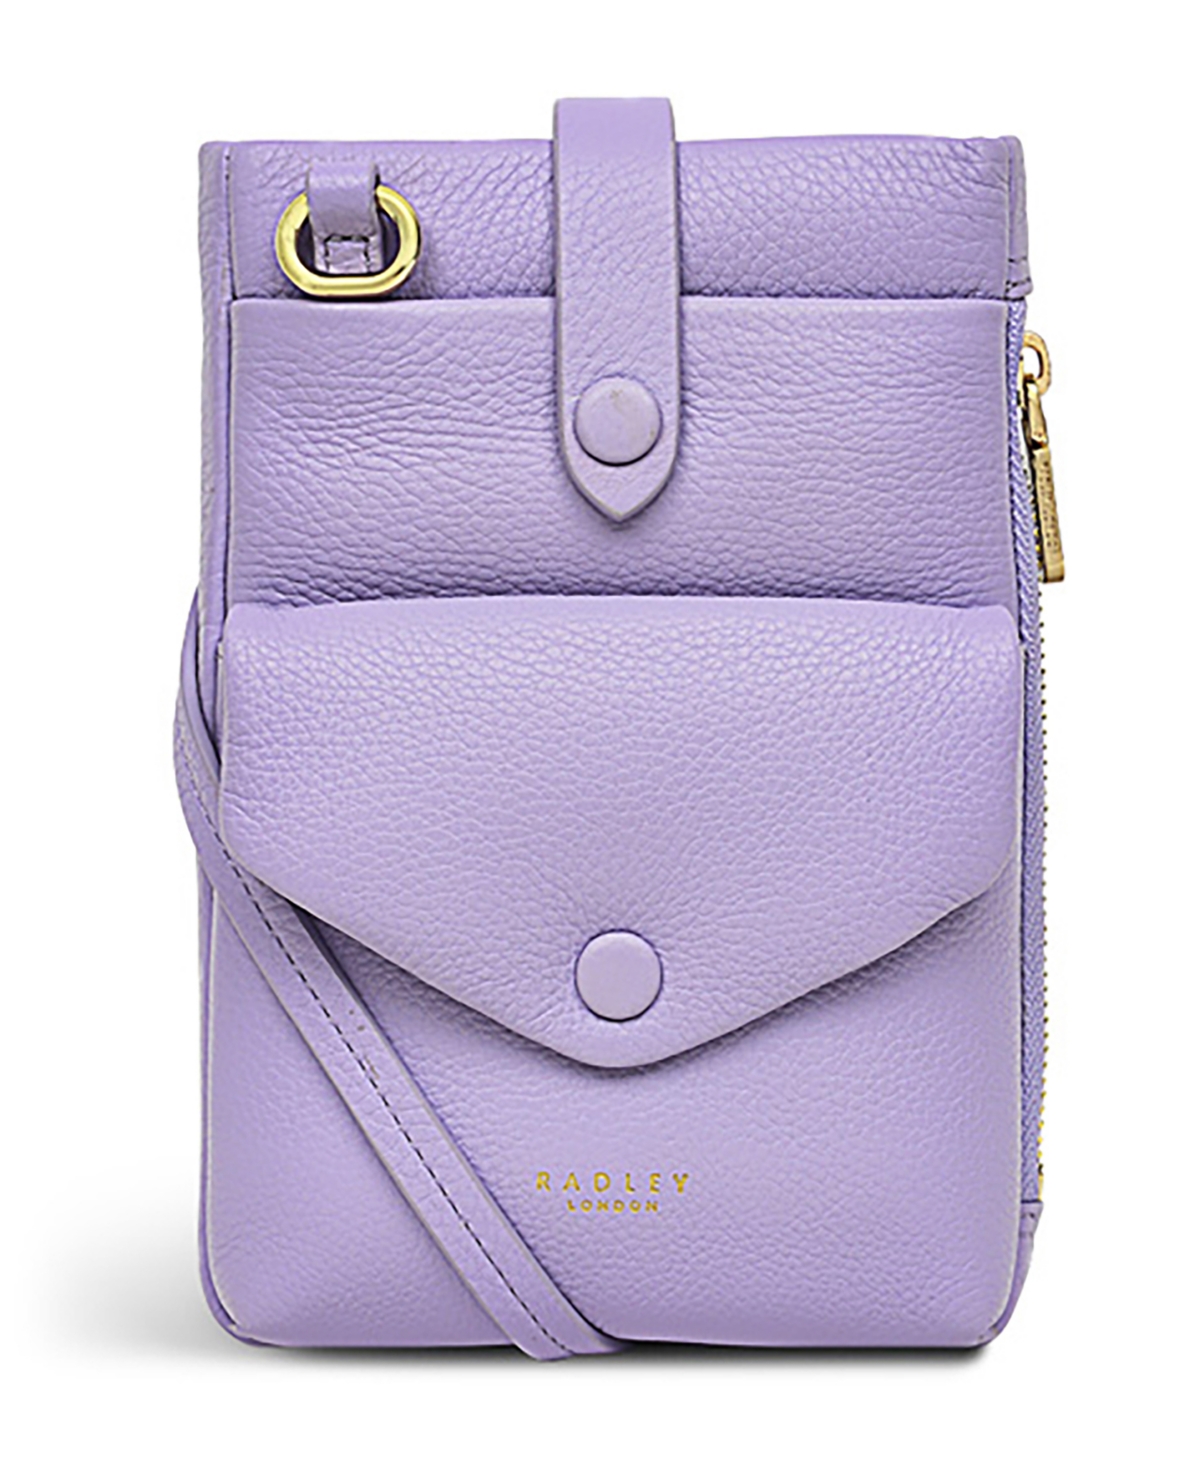 Radley London Mallow Street Mini Phone Crossbody Bag In Lavender